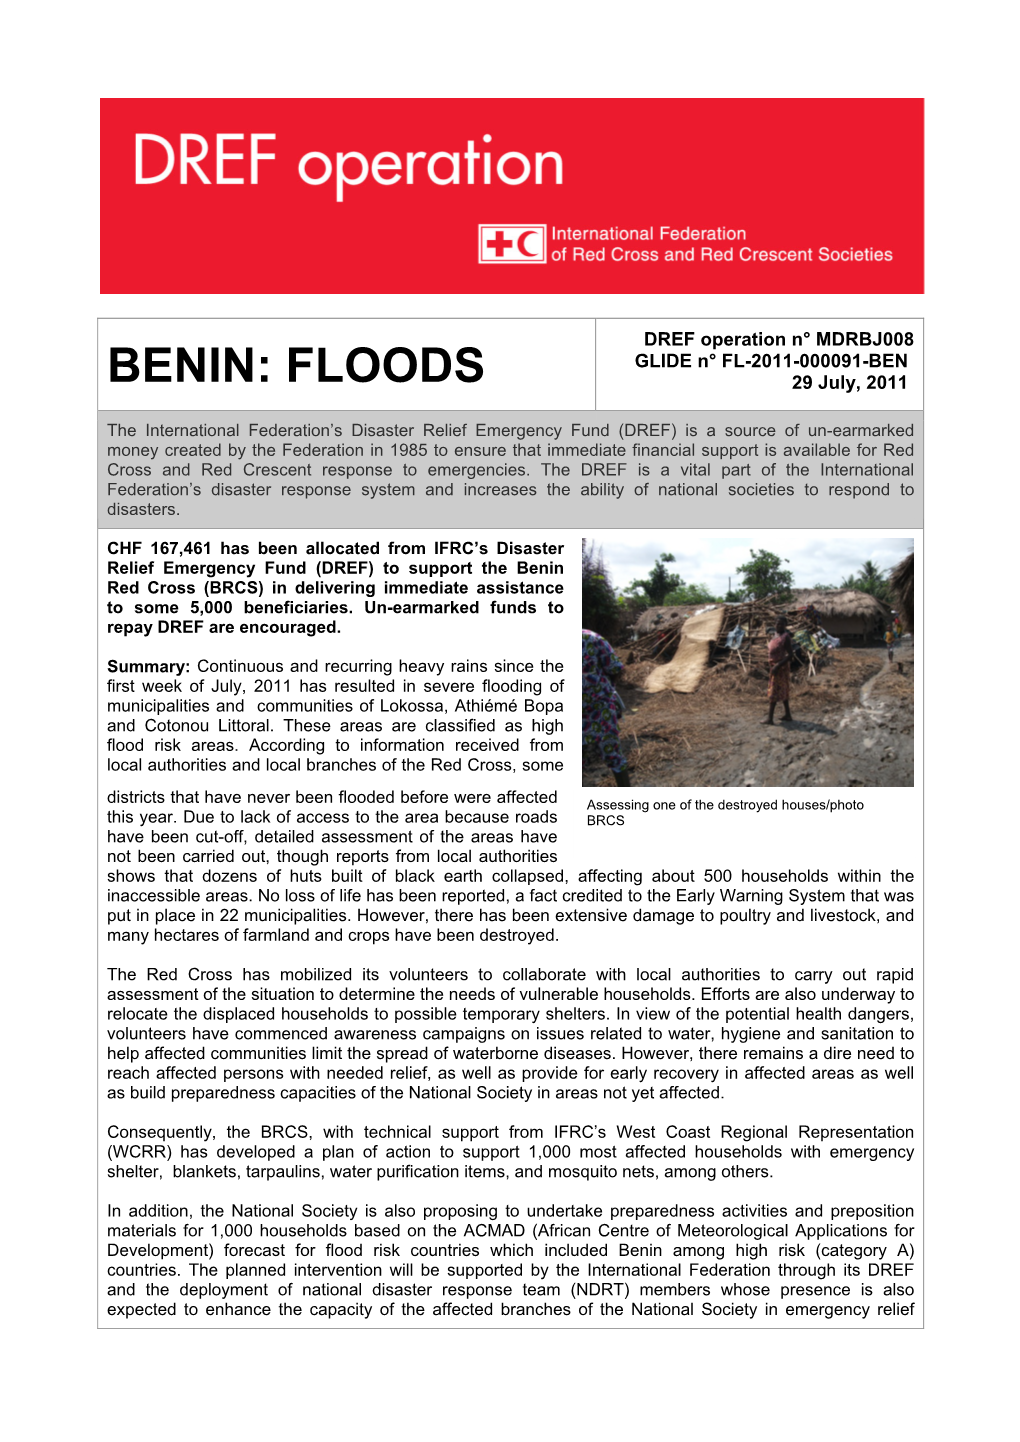 BENIN: FLOODS 29 July, 2011